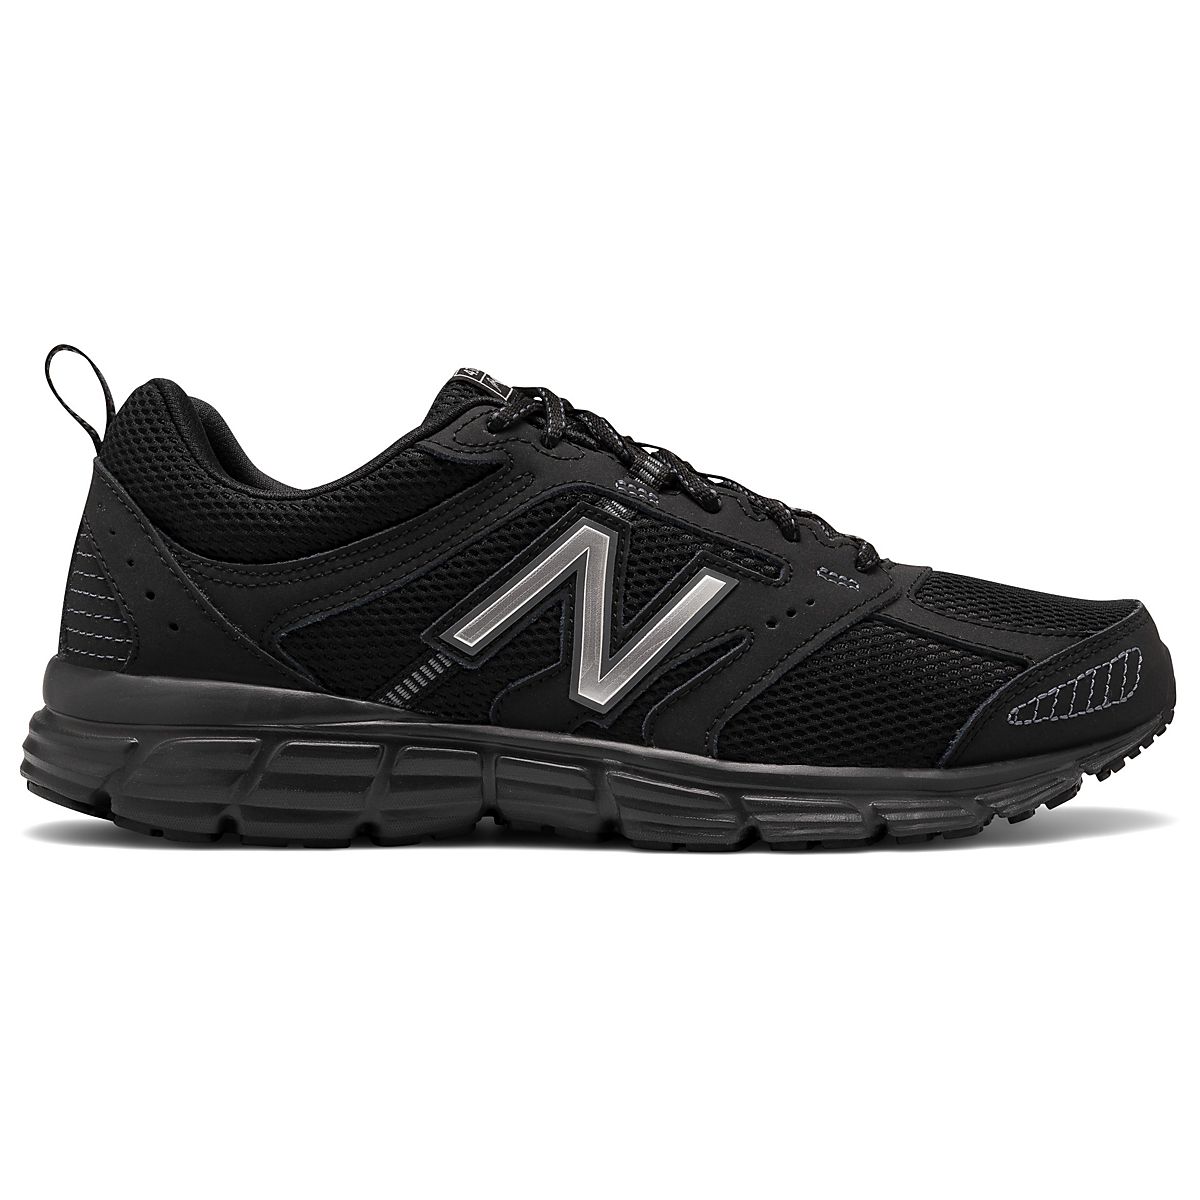 New Balance Men's 430v1 Running Shoes | Free Shipping at Academy